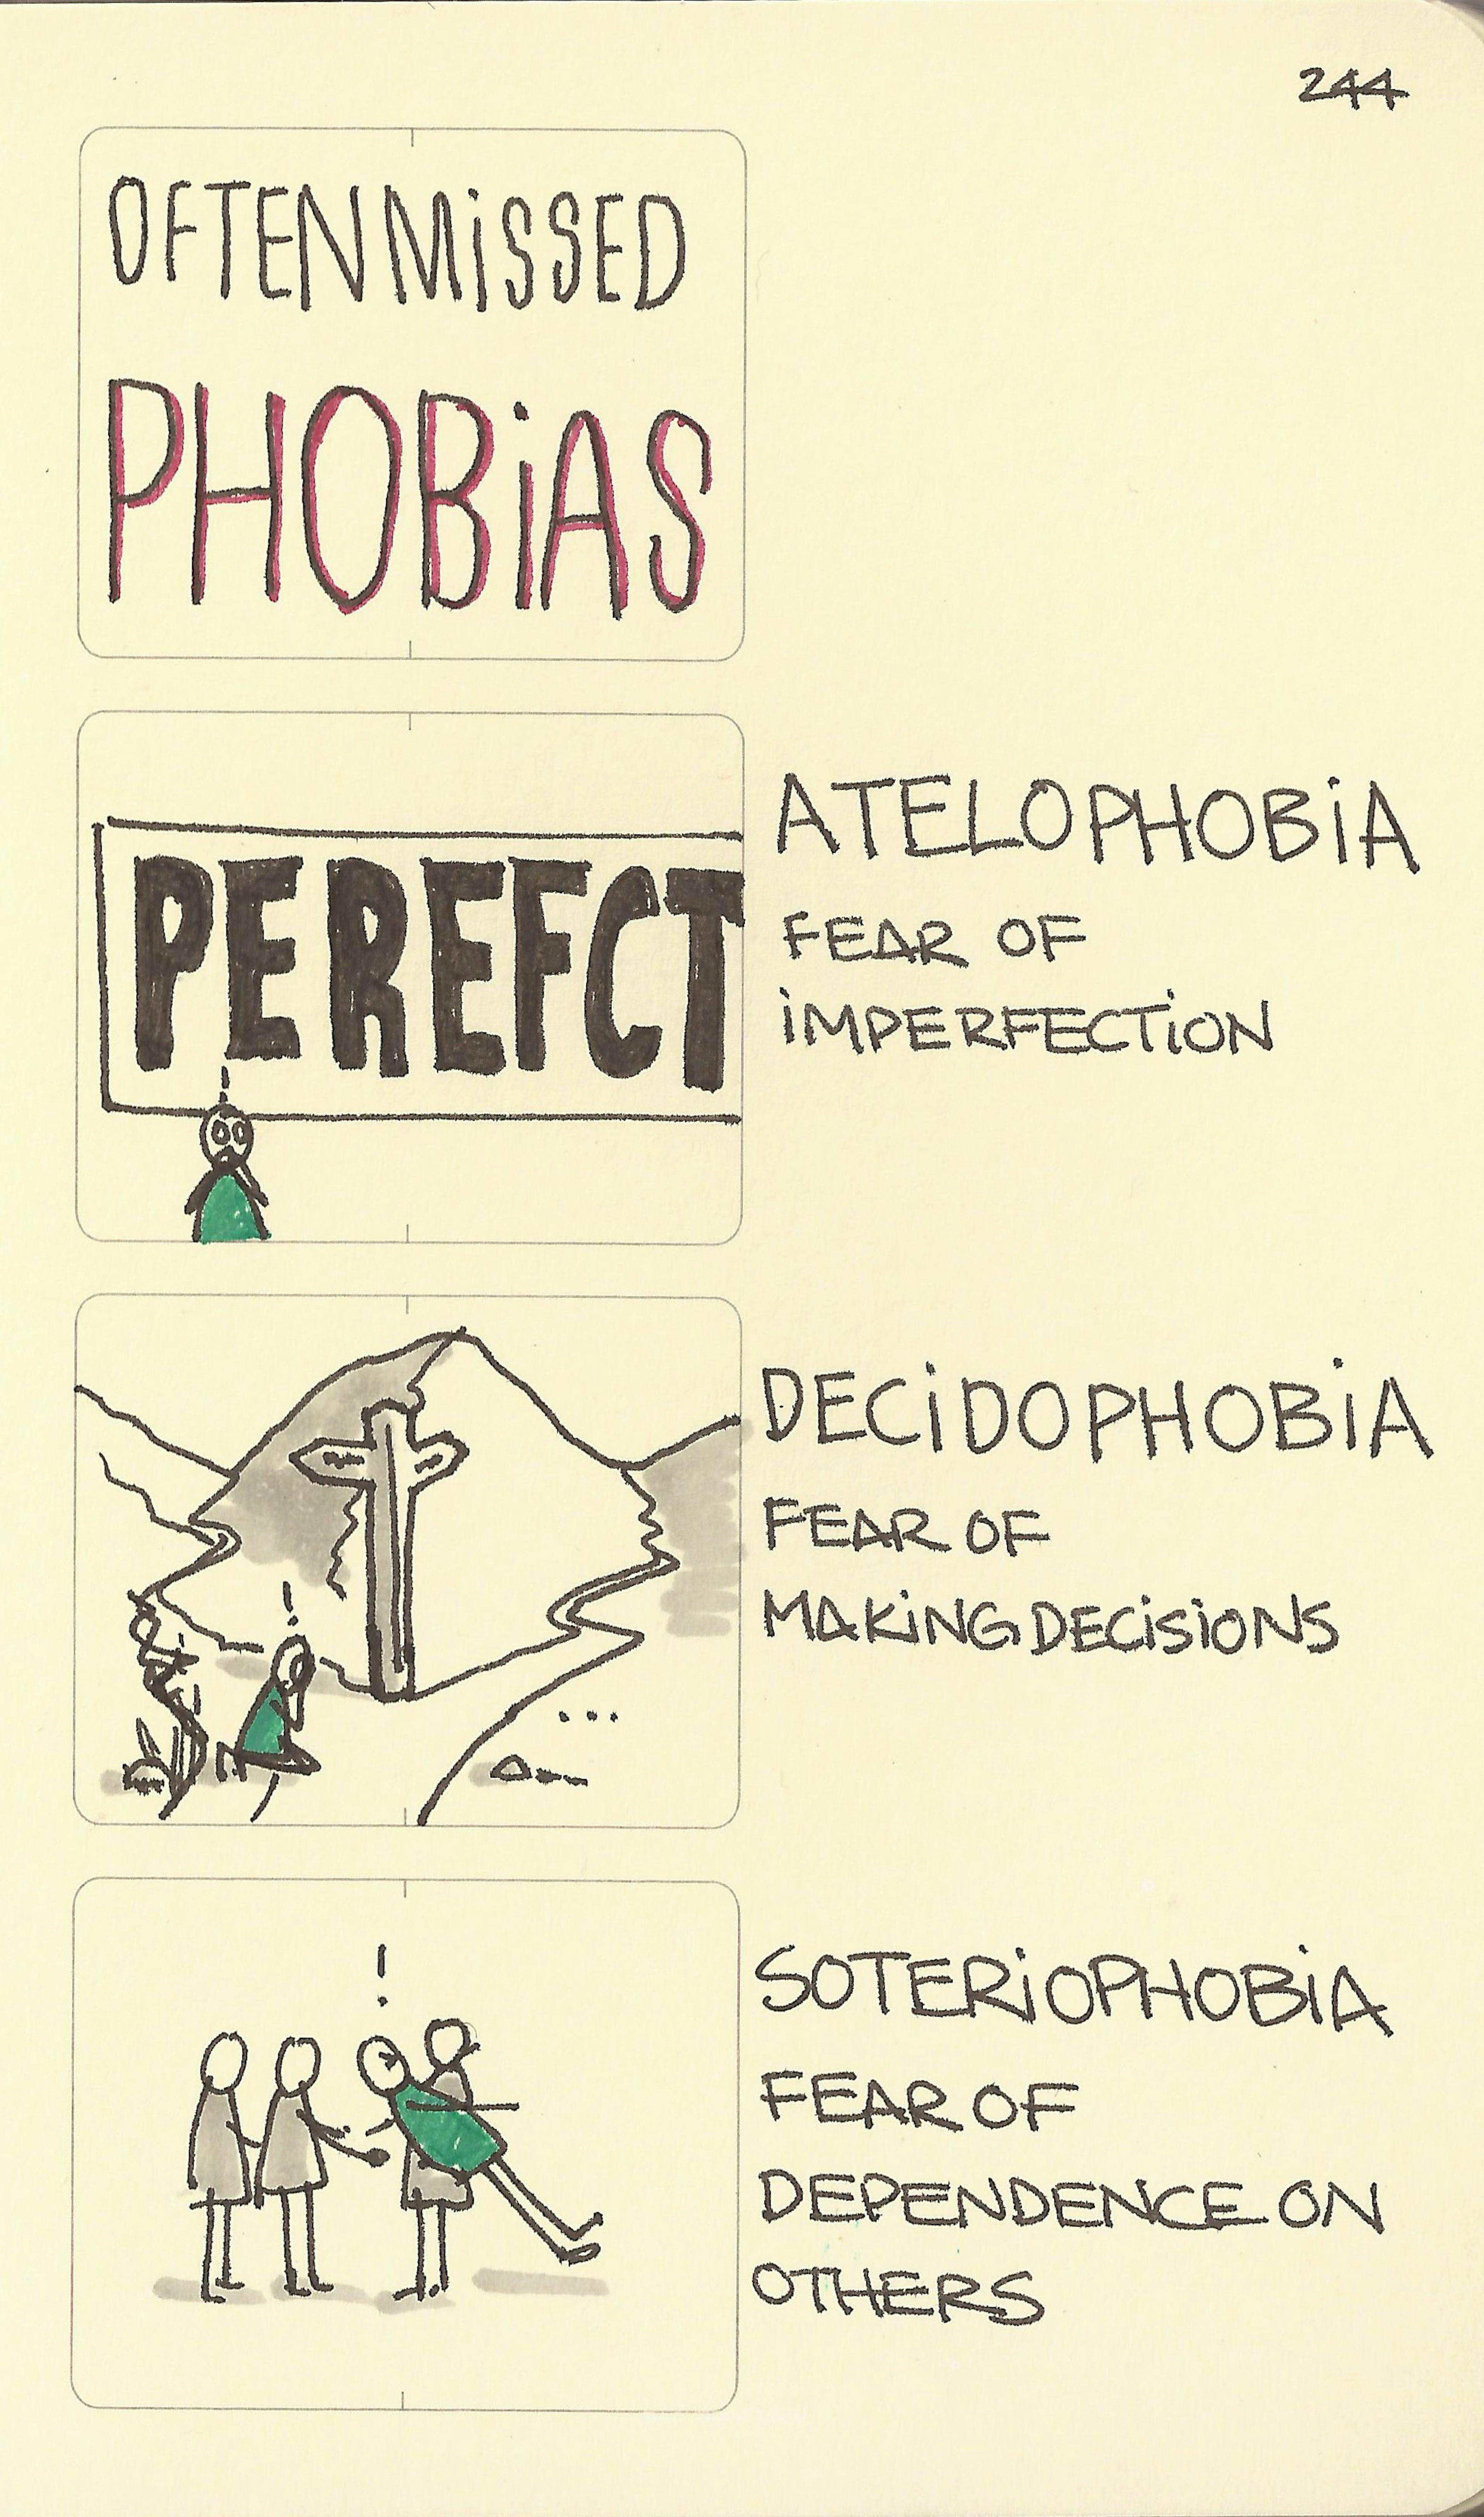 Often missed phobias - Sketchplanations